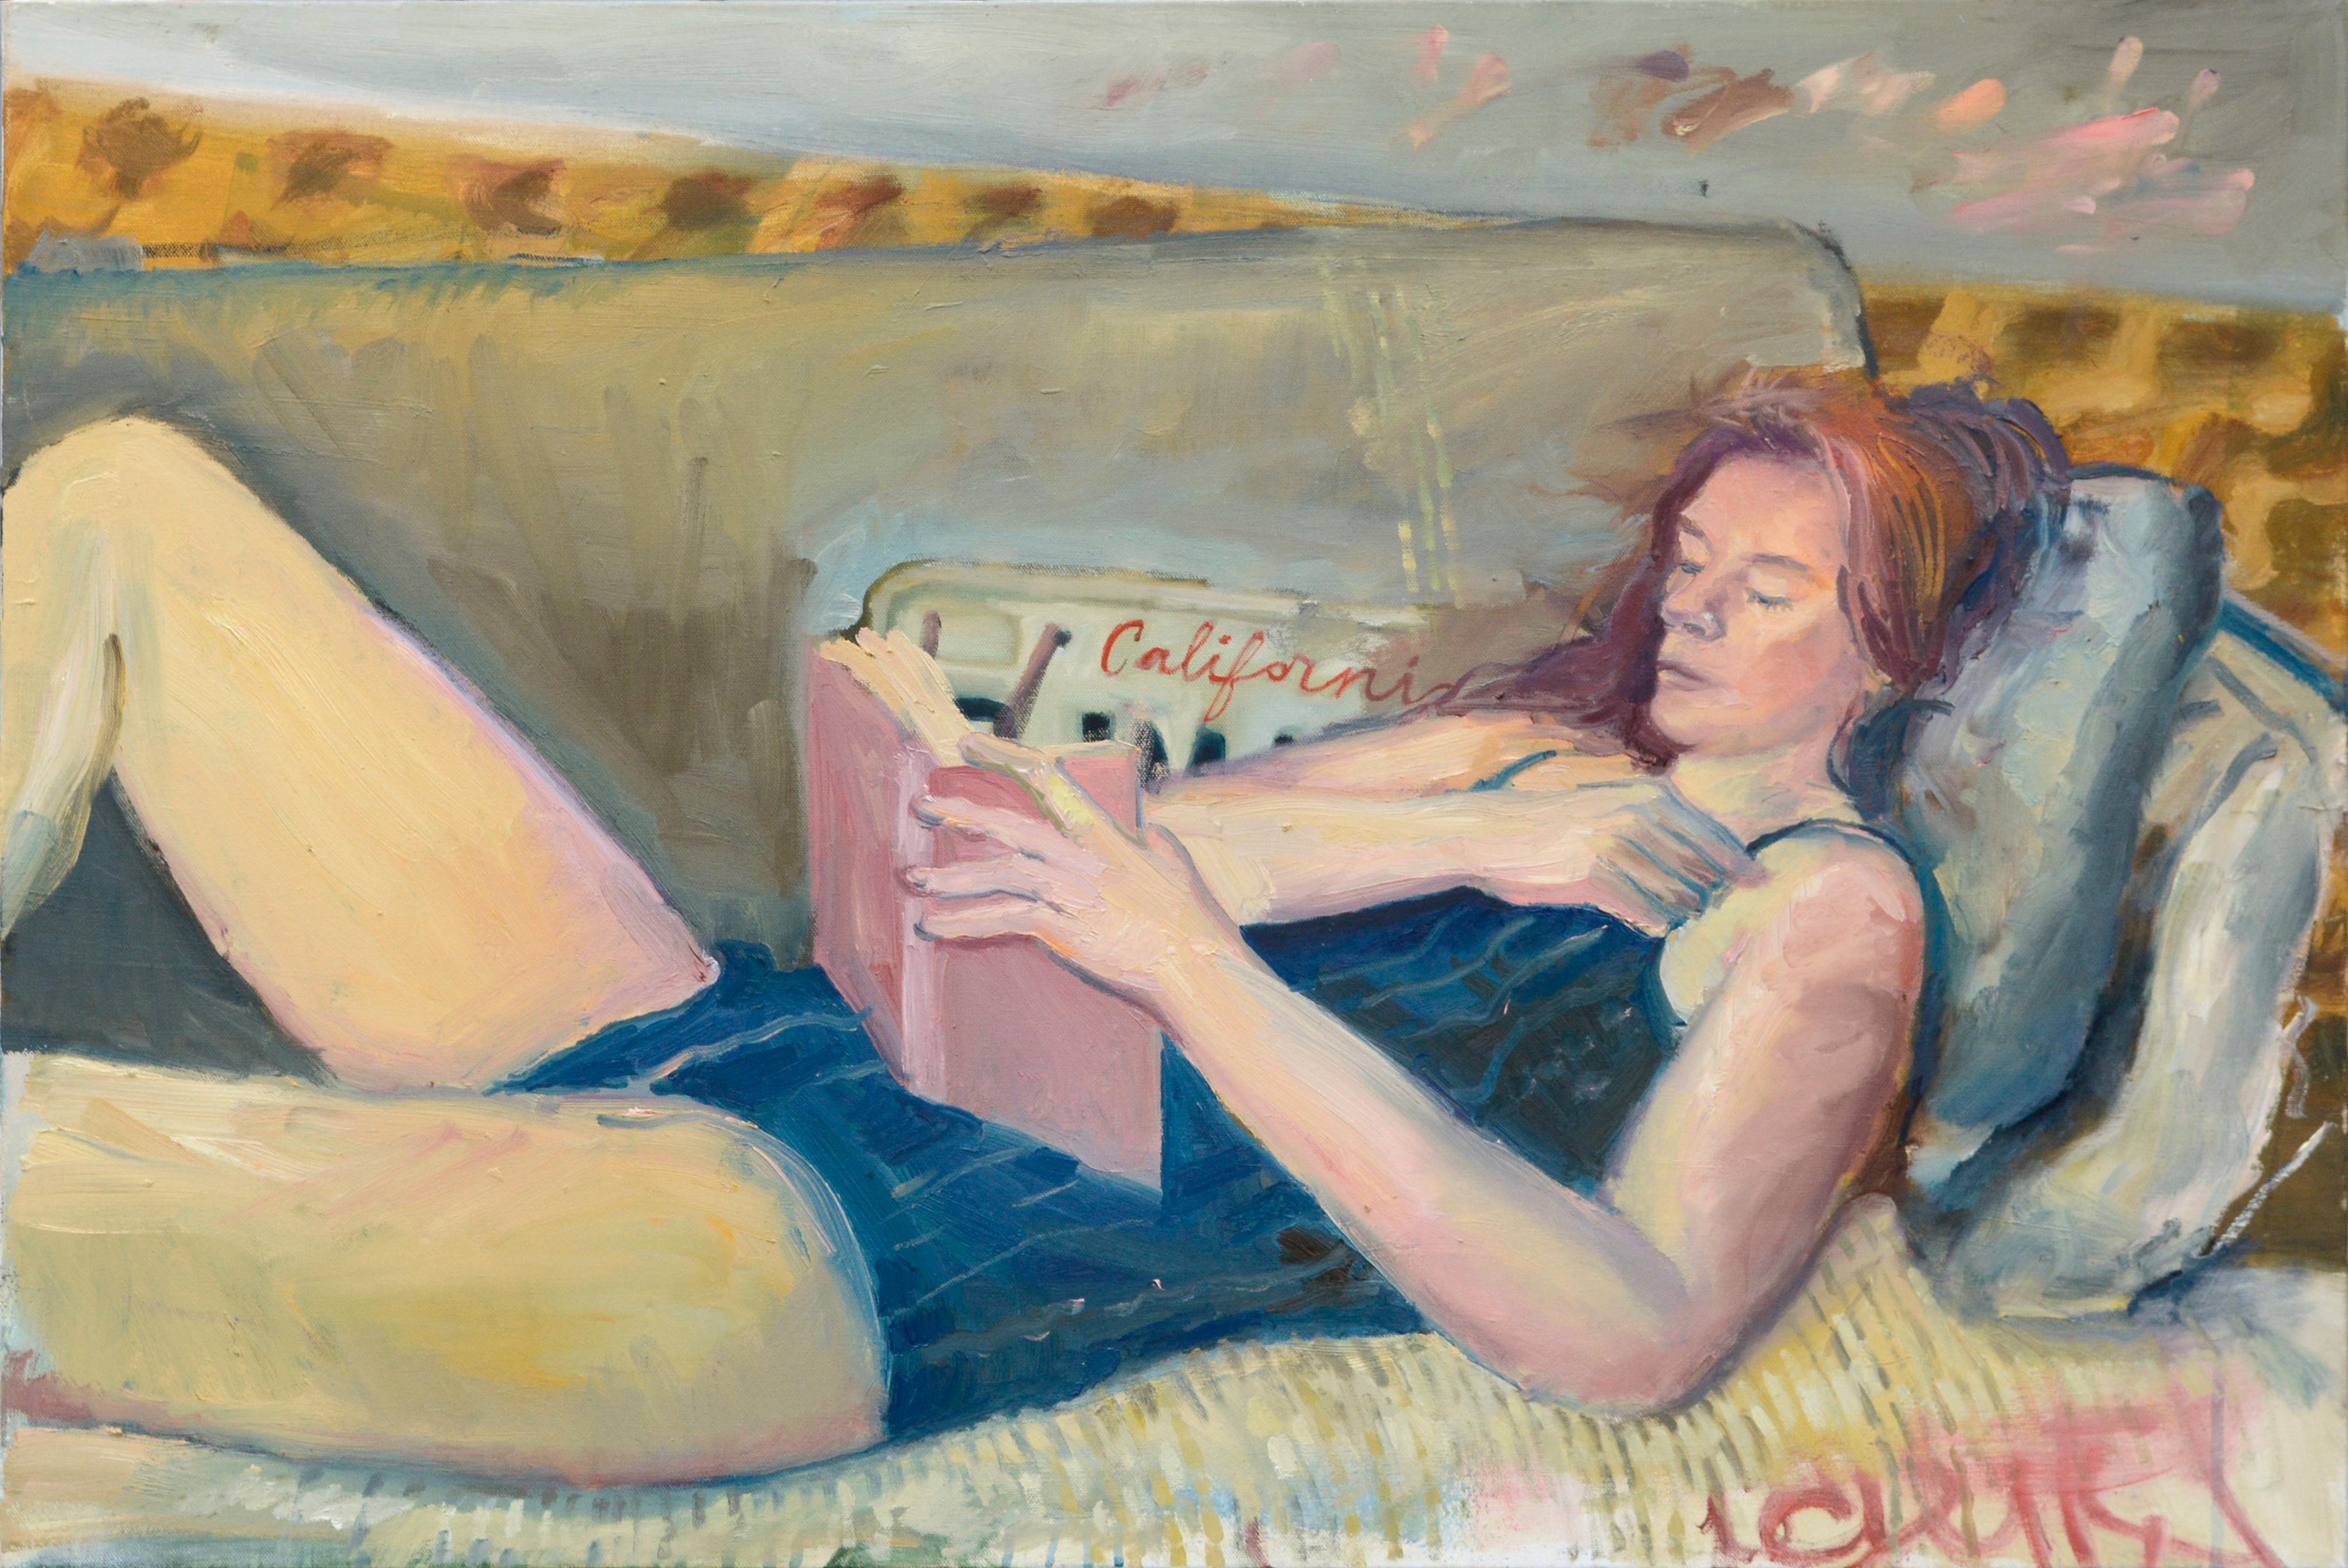 Wyn Di Stefano Portrait Painting -  "Annie", Contemporary California Figurative Impressionist Portrait of a Woman 